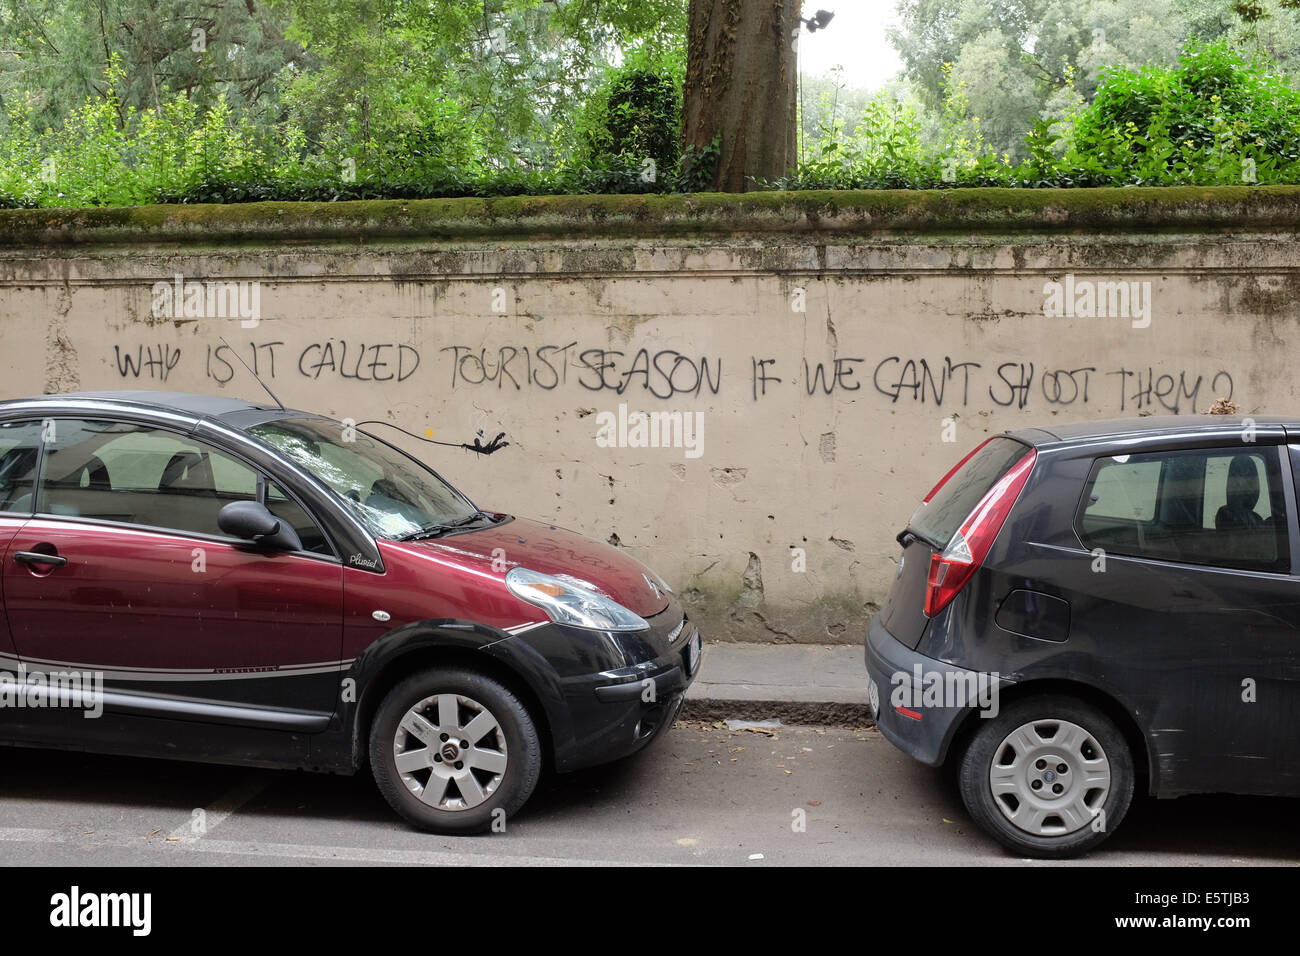 Graffiti alegre reza: "Por qué se llama temporada turística si no podemos disparar contra ellos?". Foto de stock